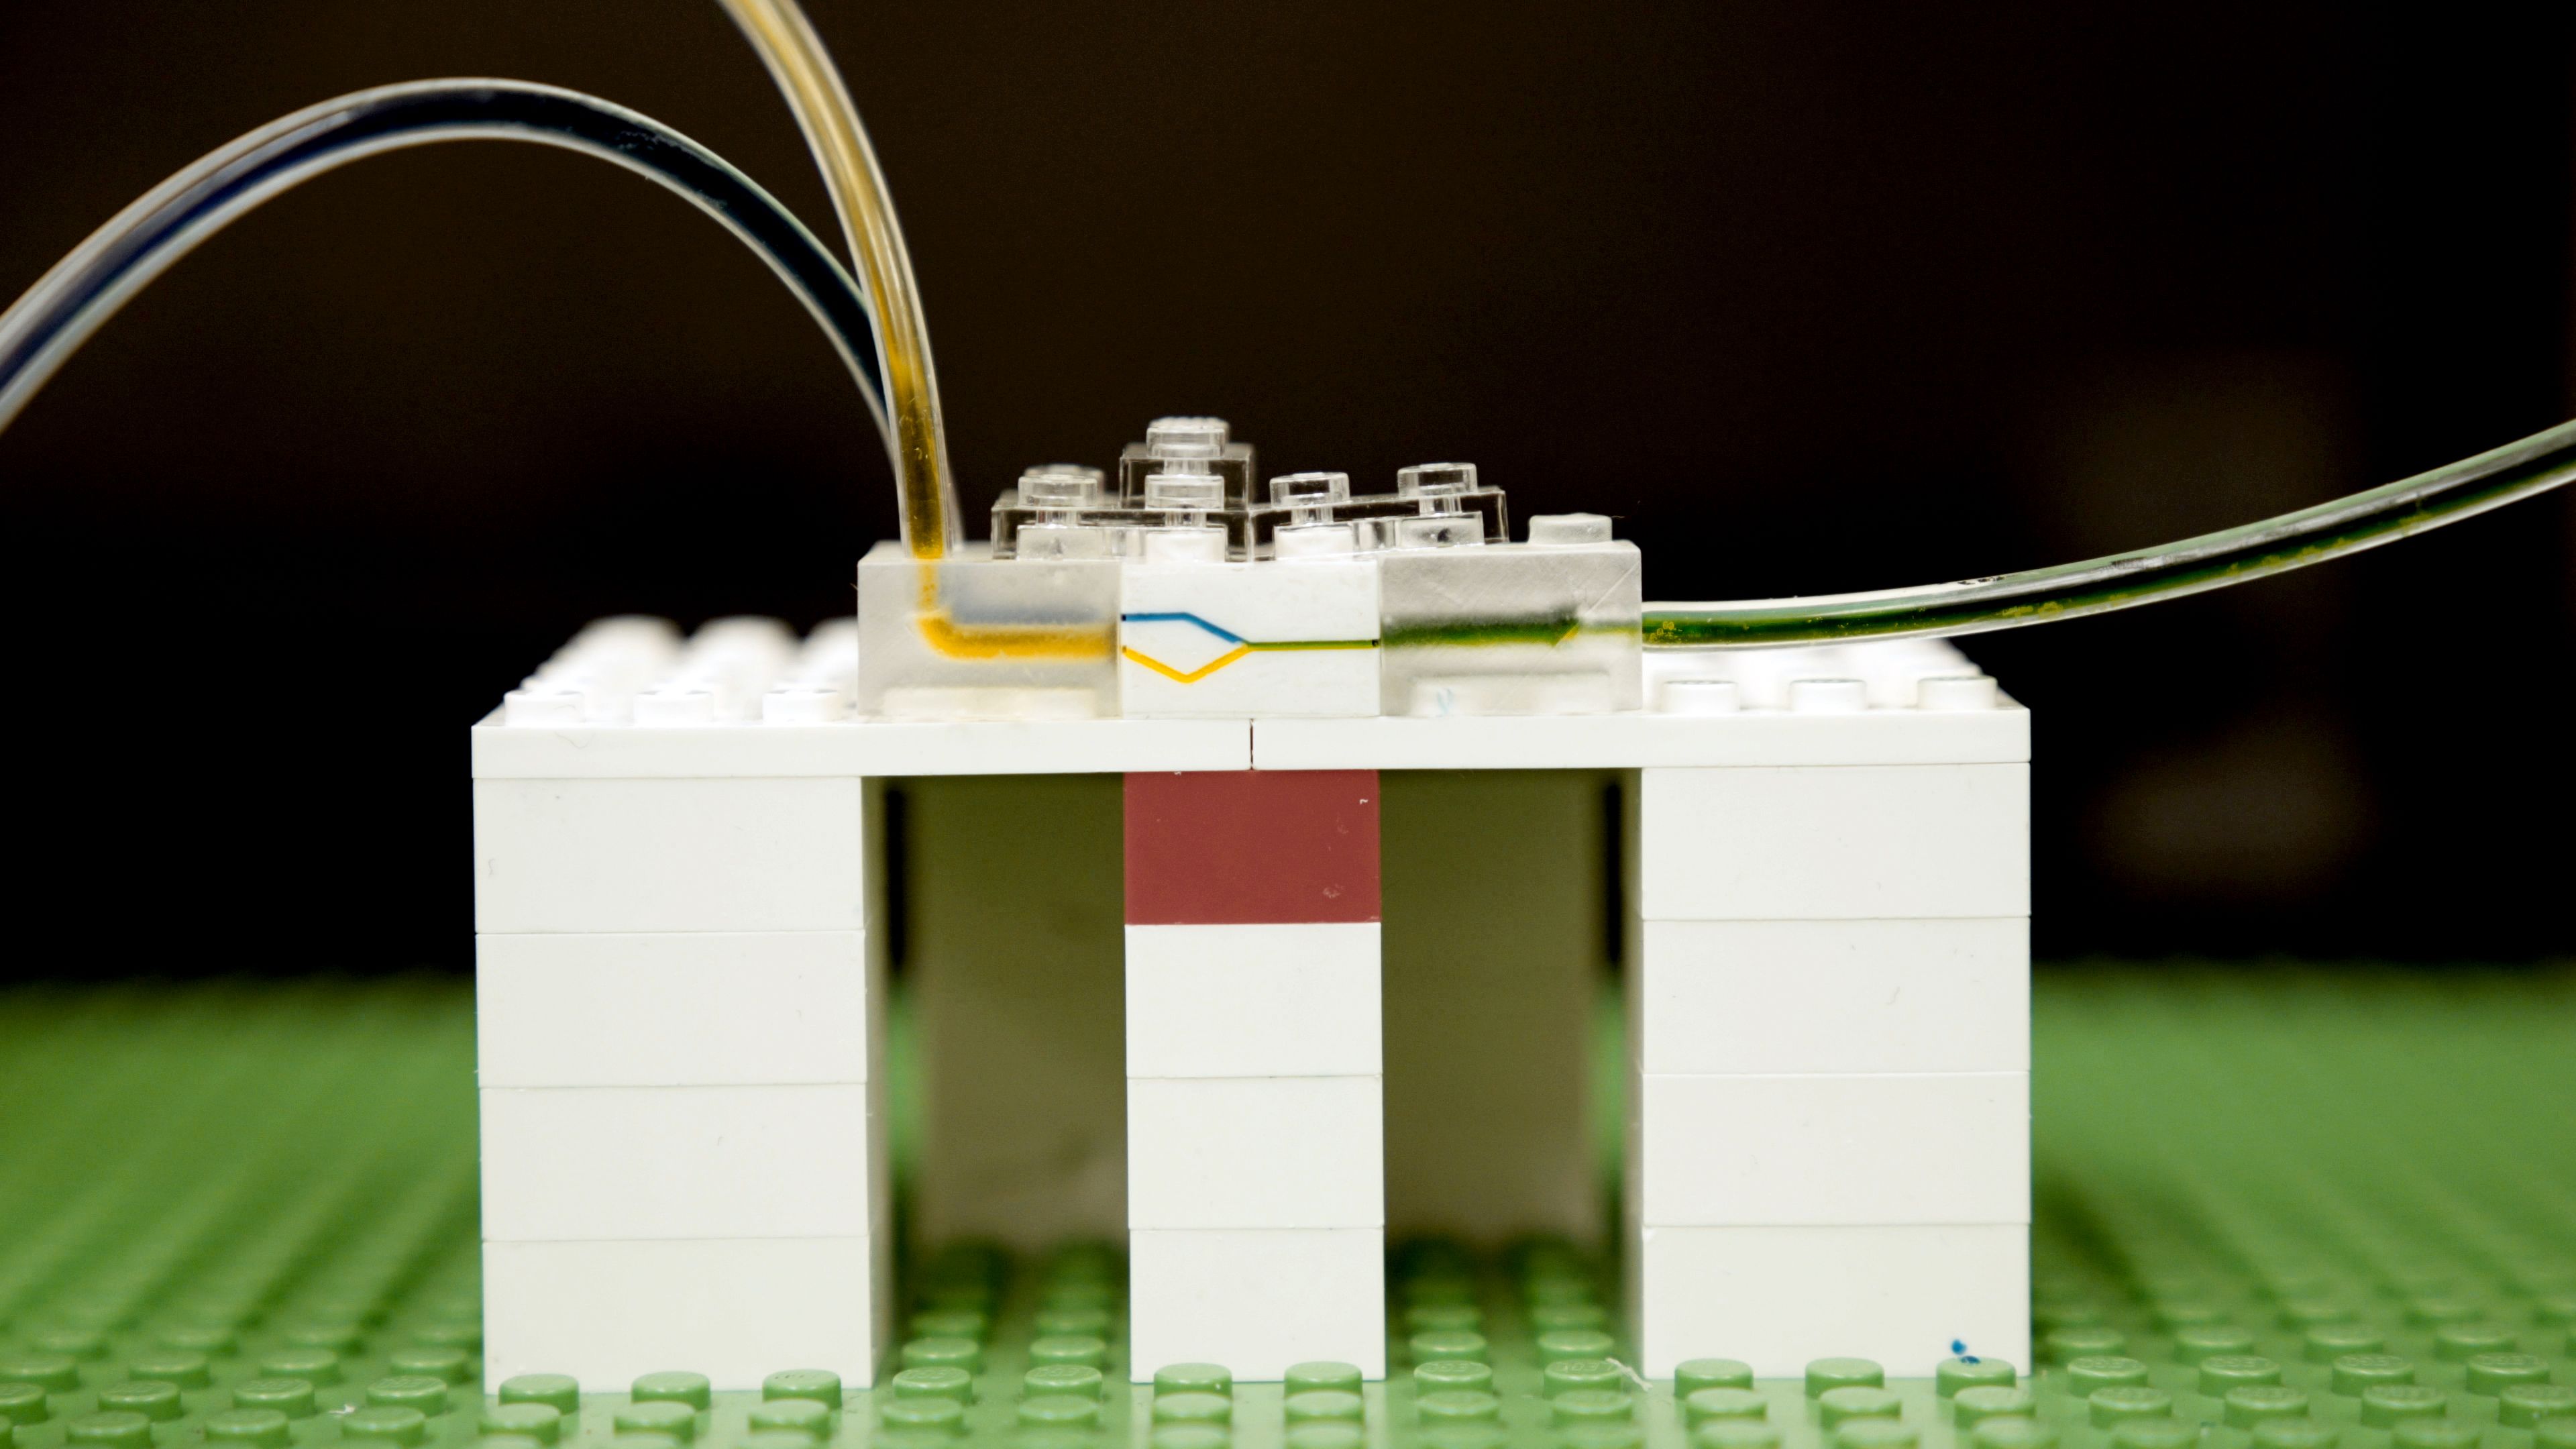 Microfluidics from bricks MIT News | Institute of Technology